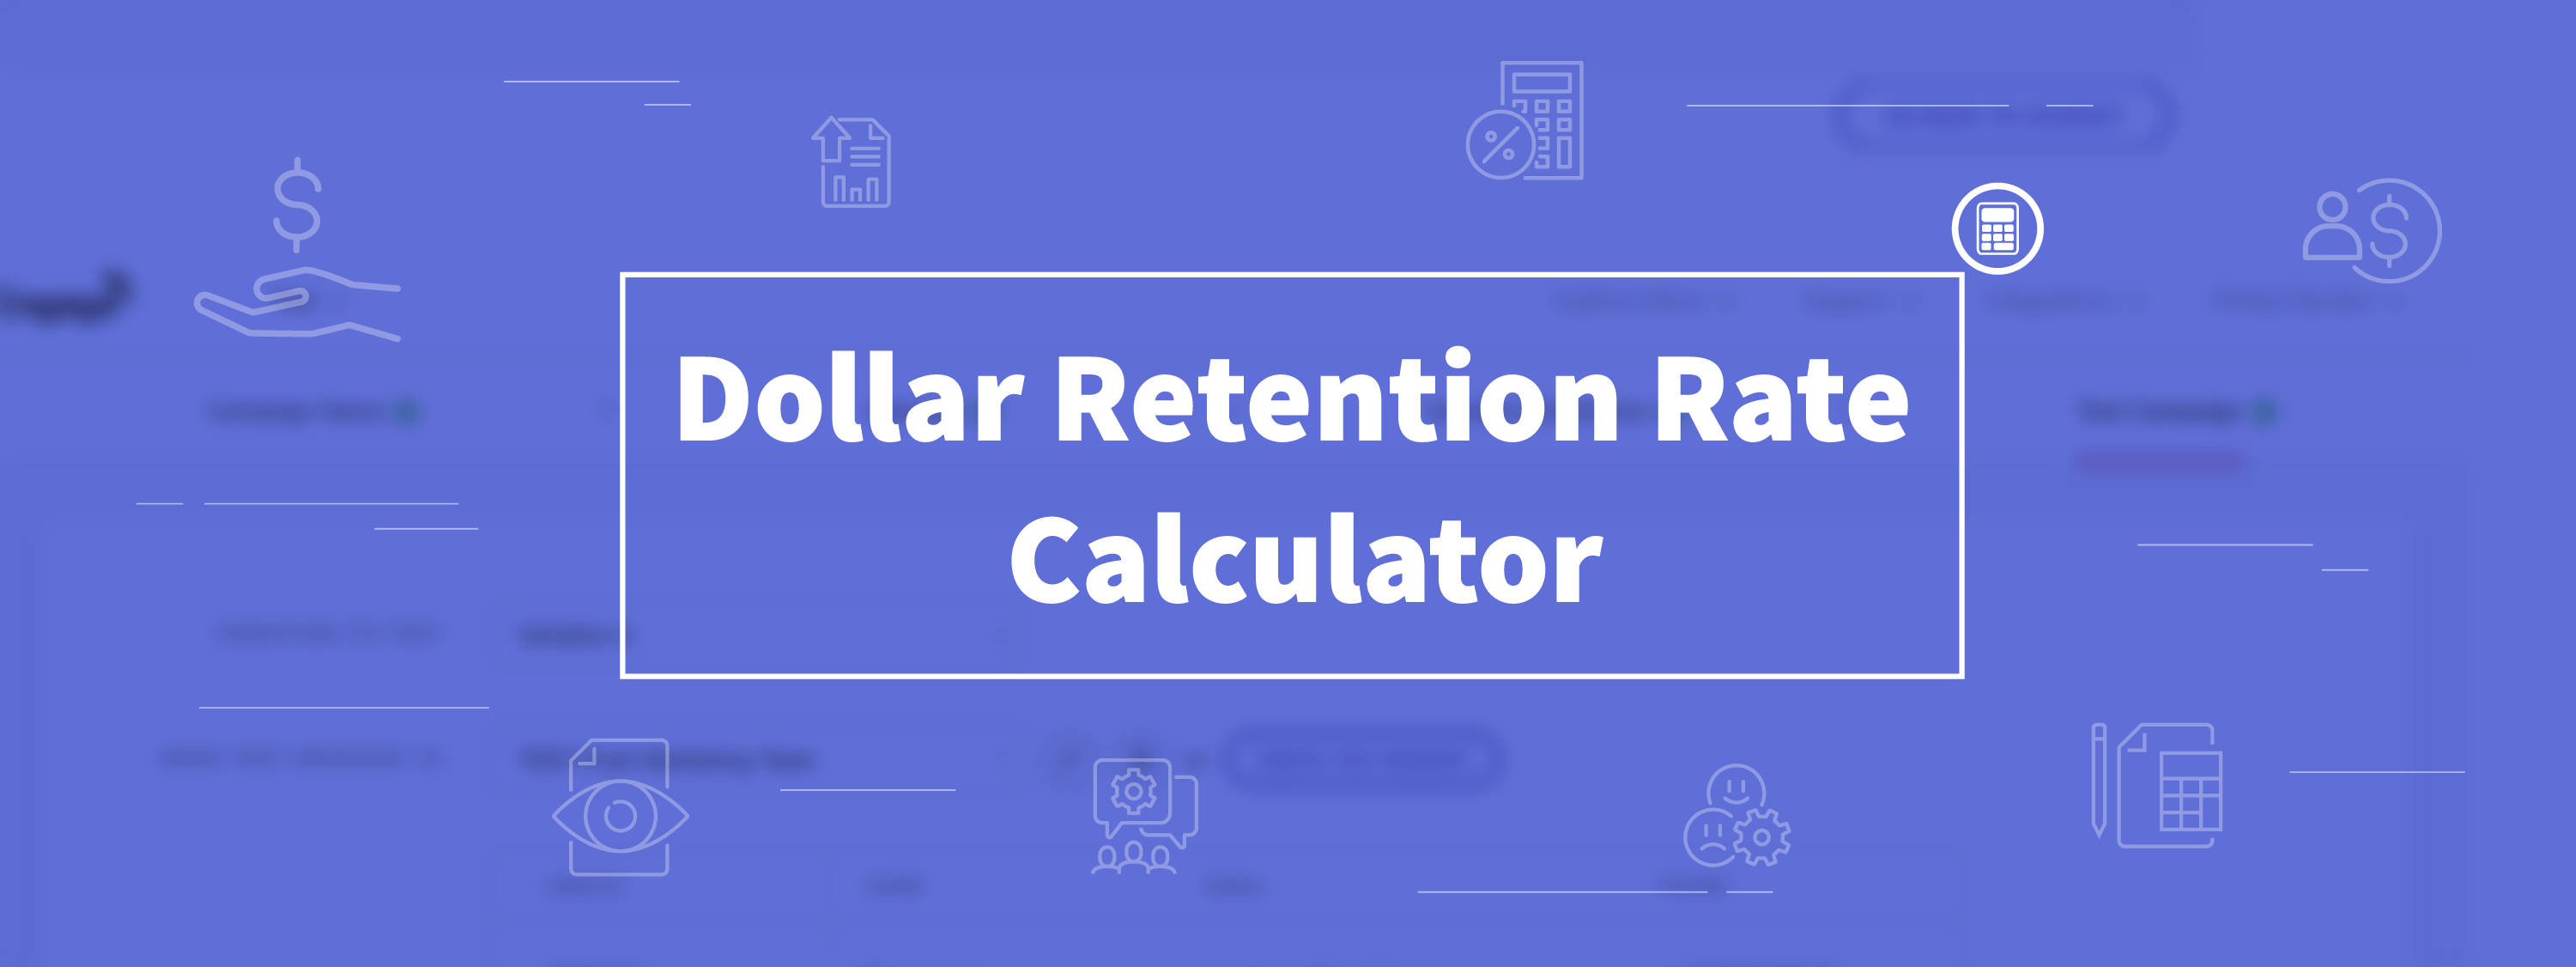 Dollar Retention Rate Calculator